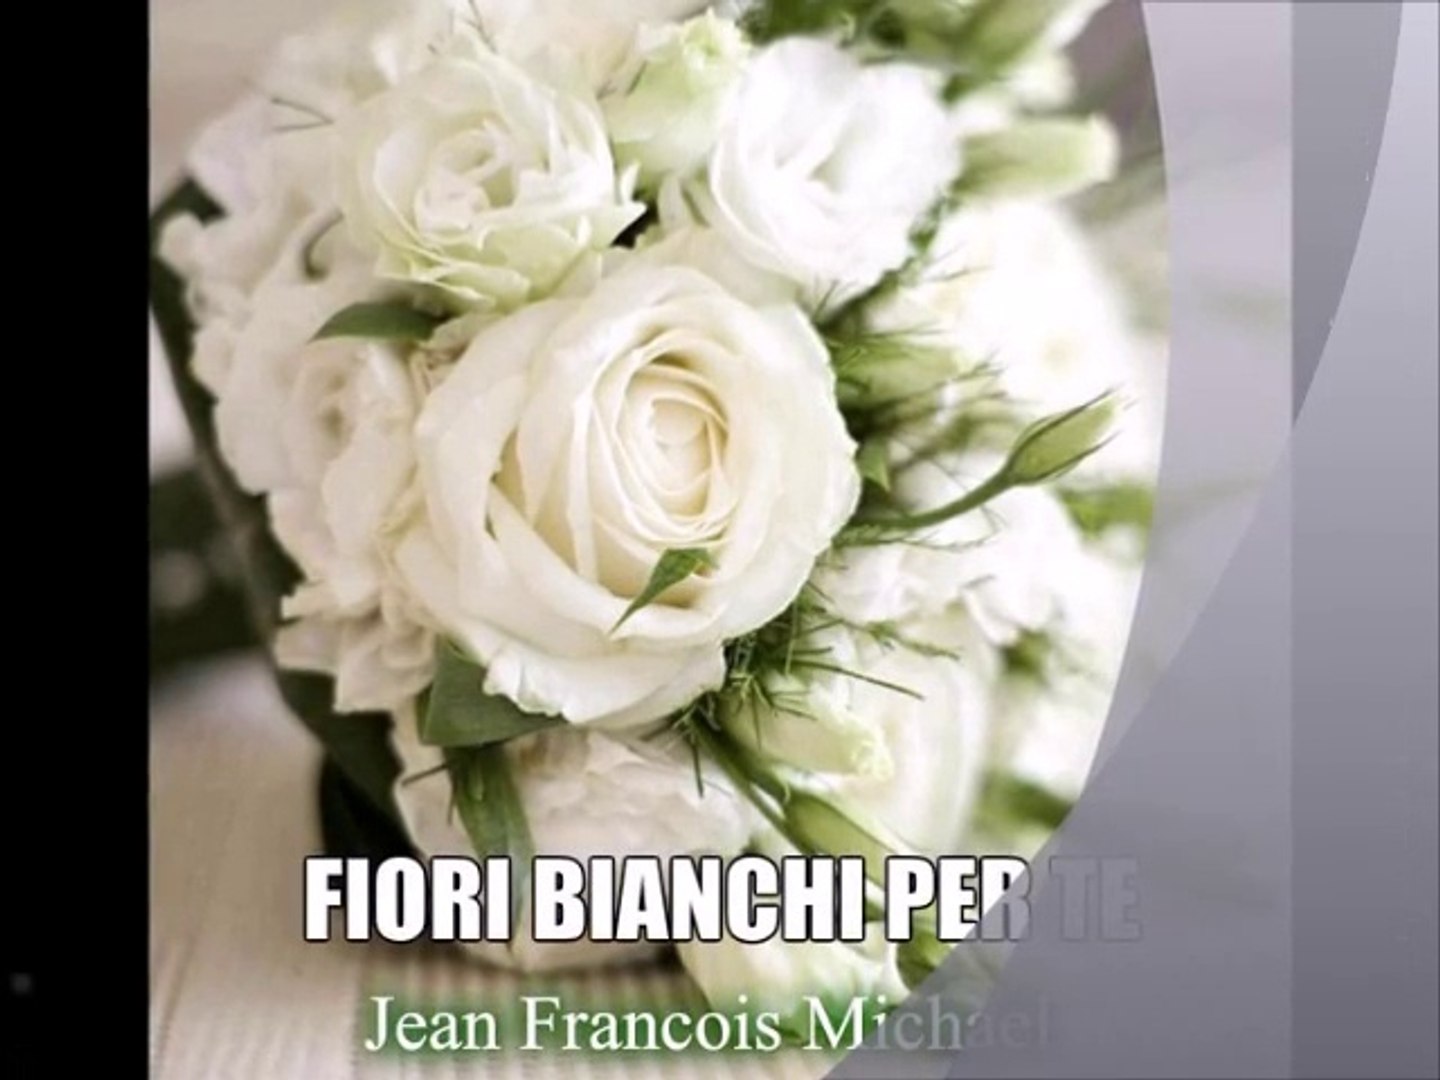 Jean Francois Michael Fiori Bianchi Per Te Video Dailymotion